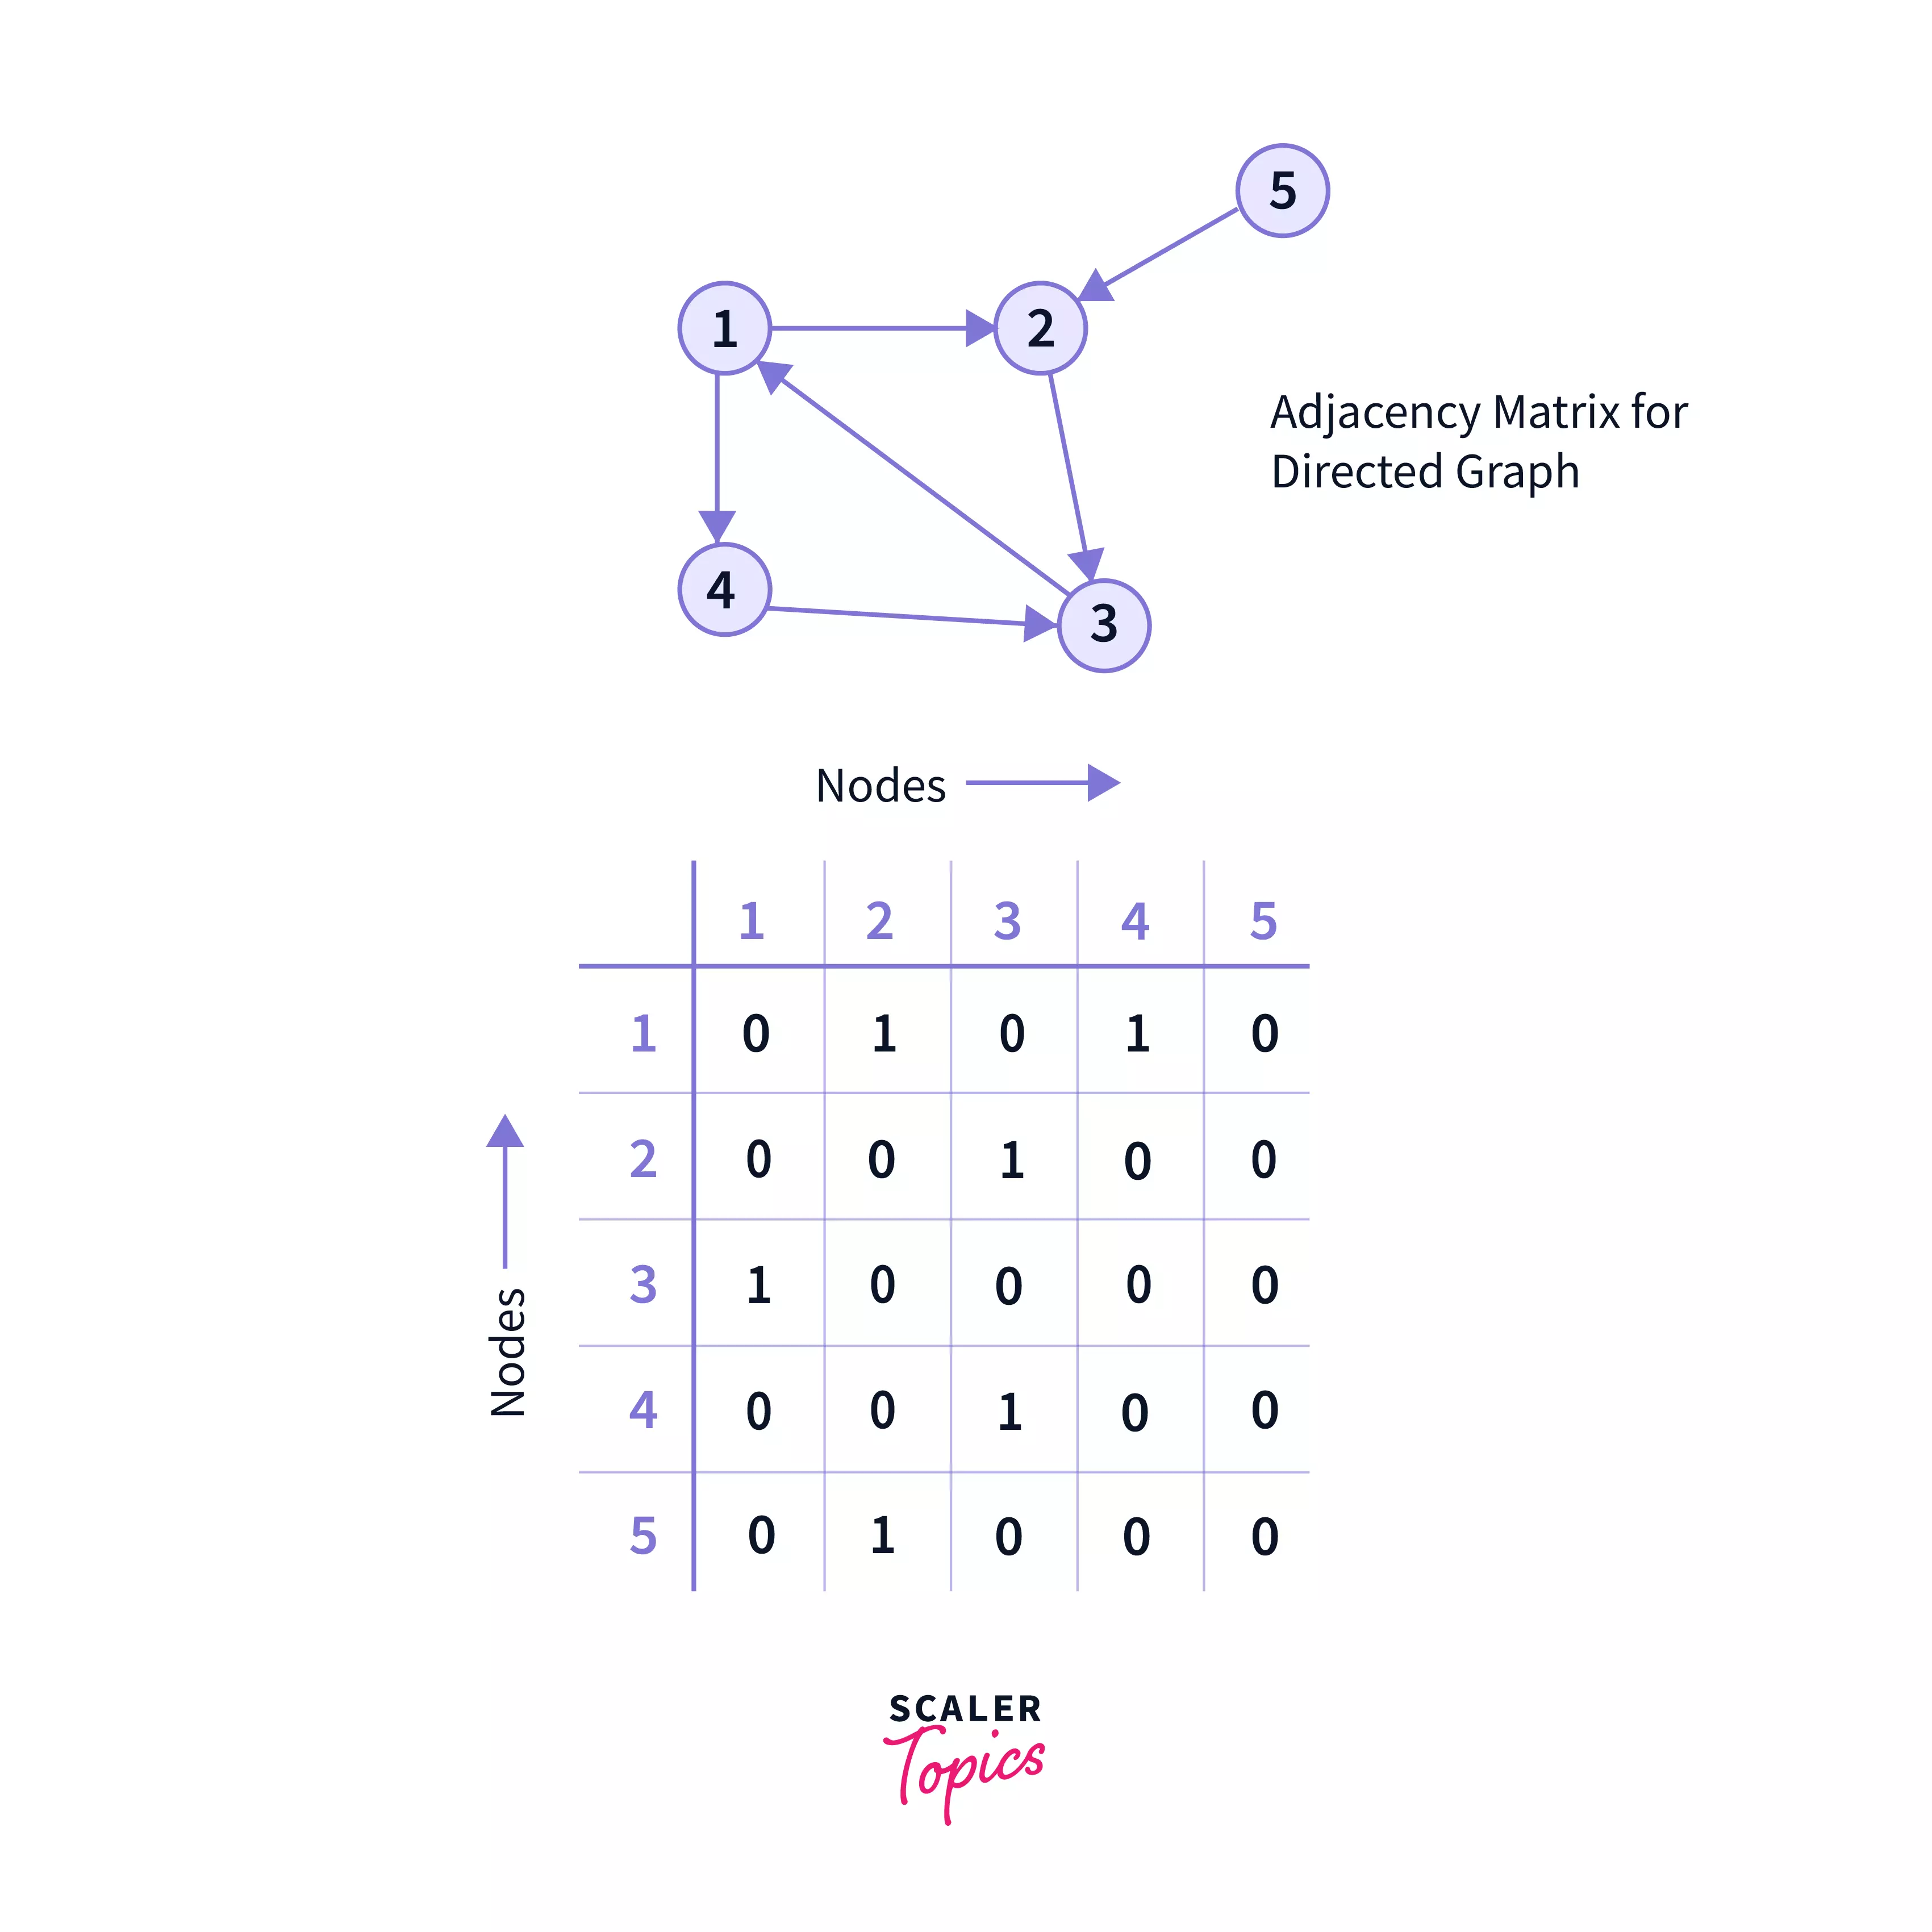 adjacency Matrix for a directed graph